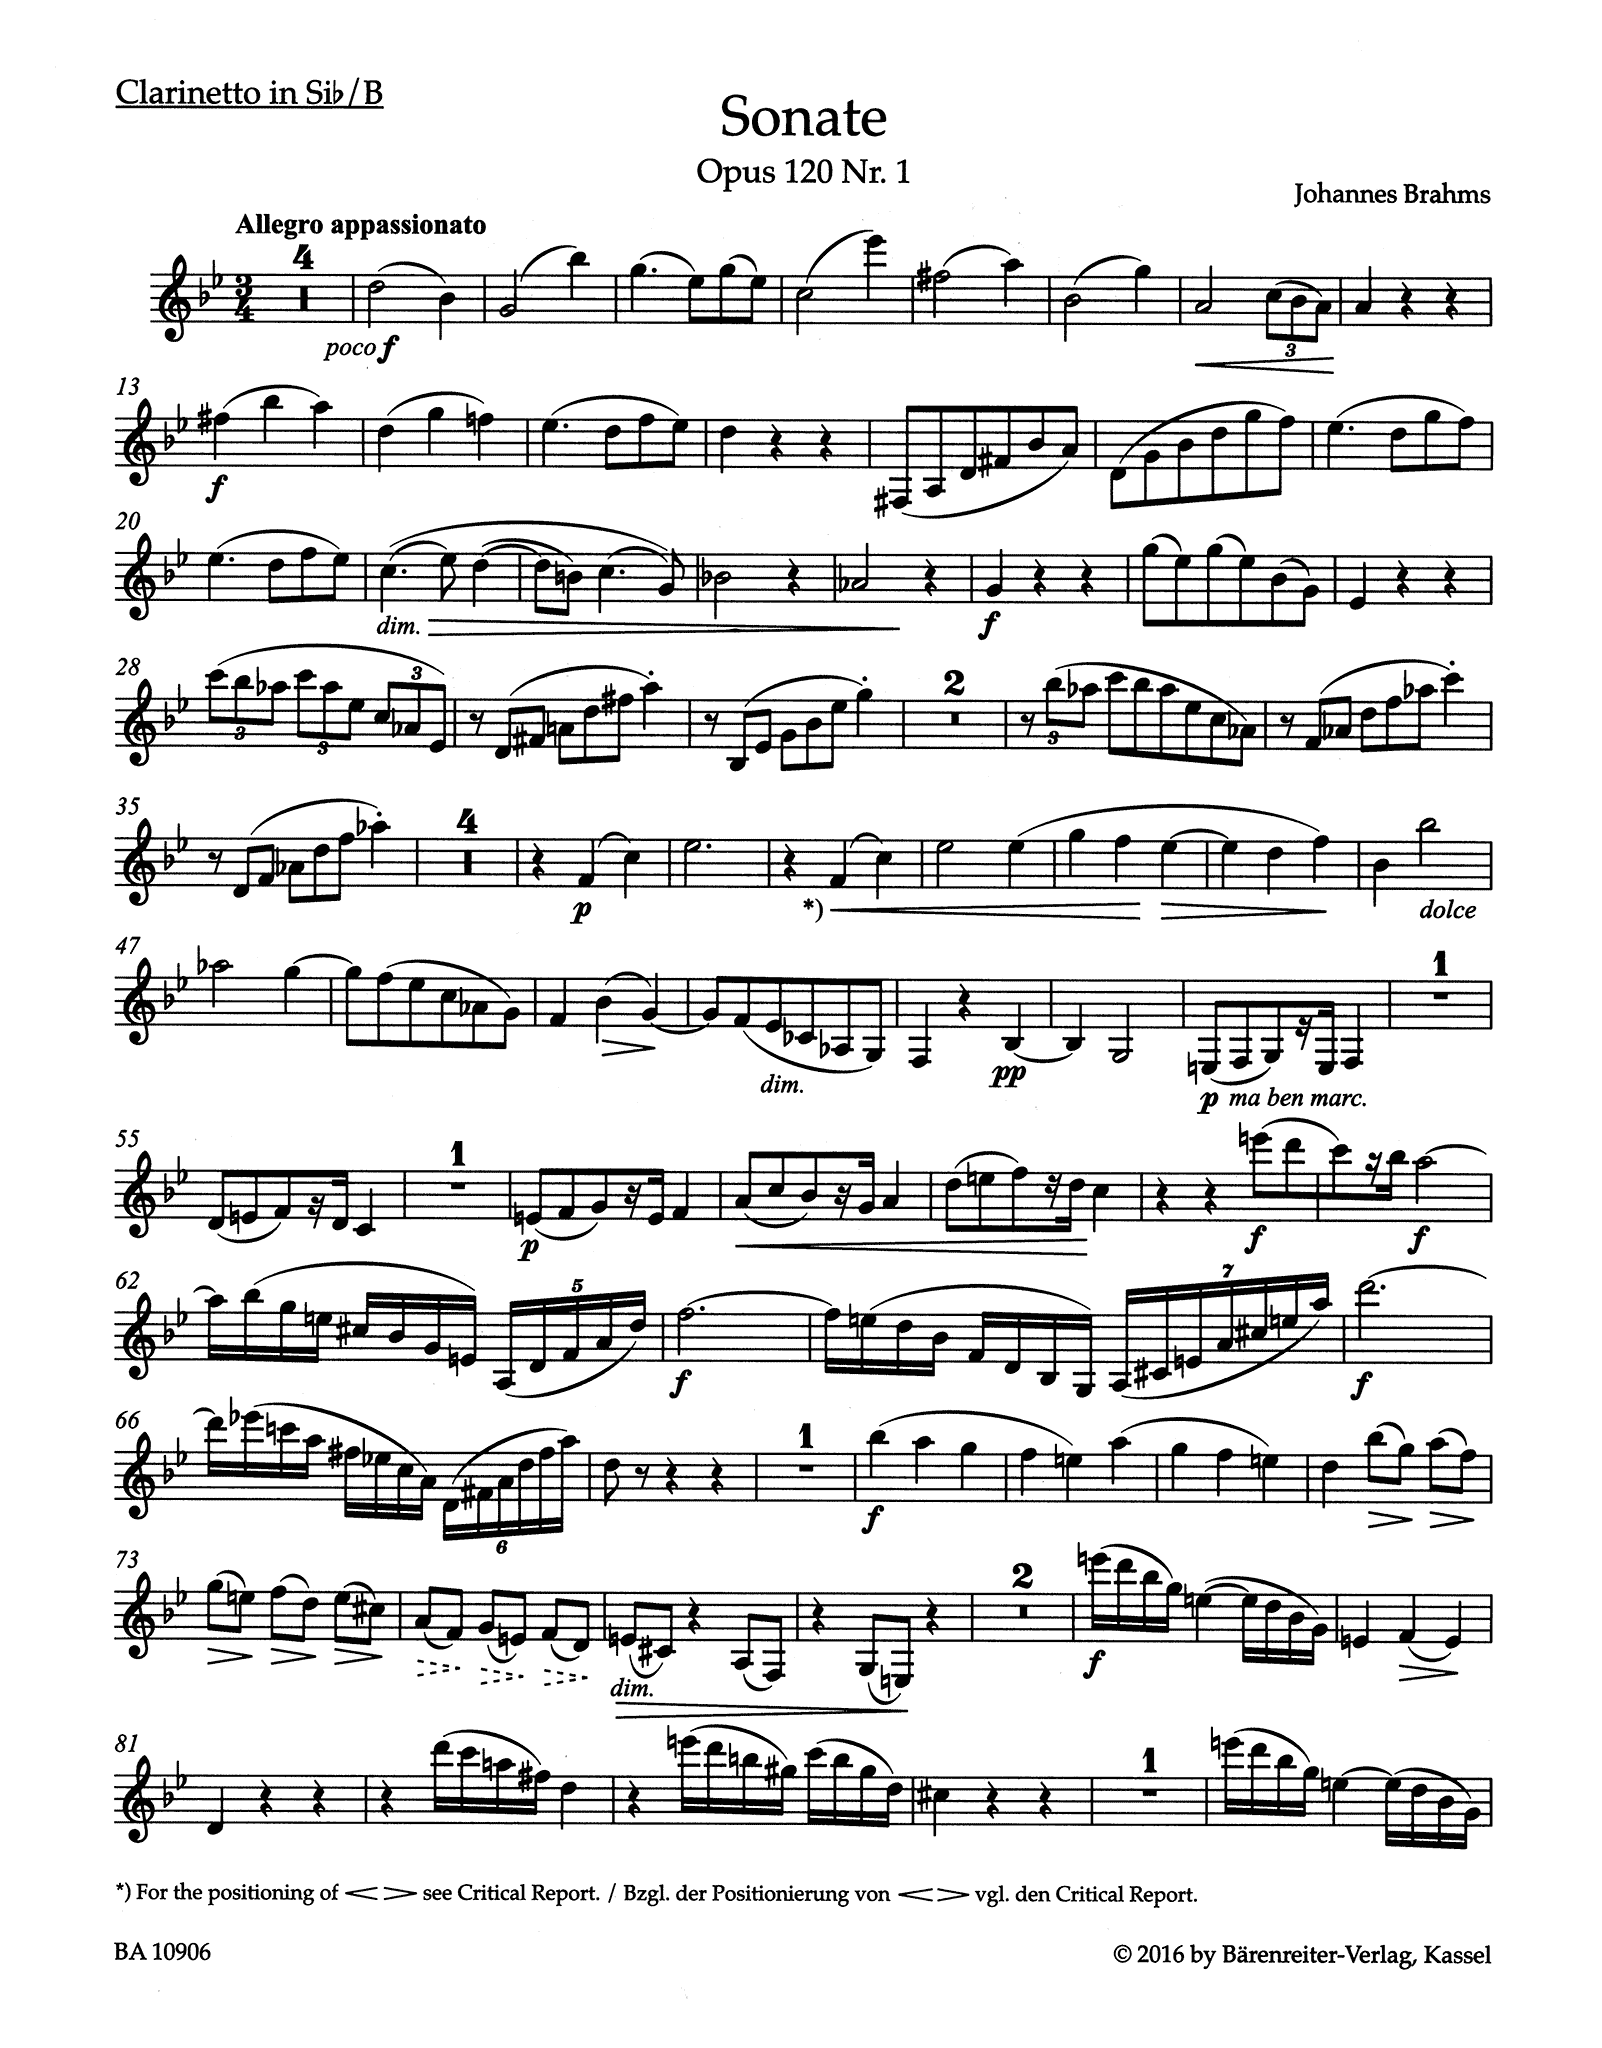 Sonata in F Minor, Op. 120 No. 1 Clarinet part